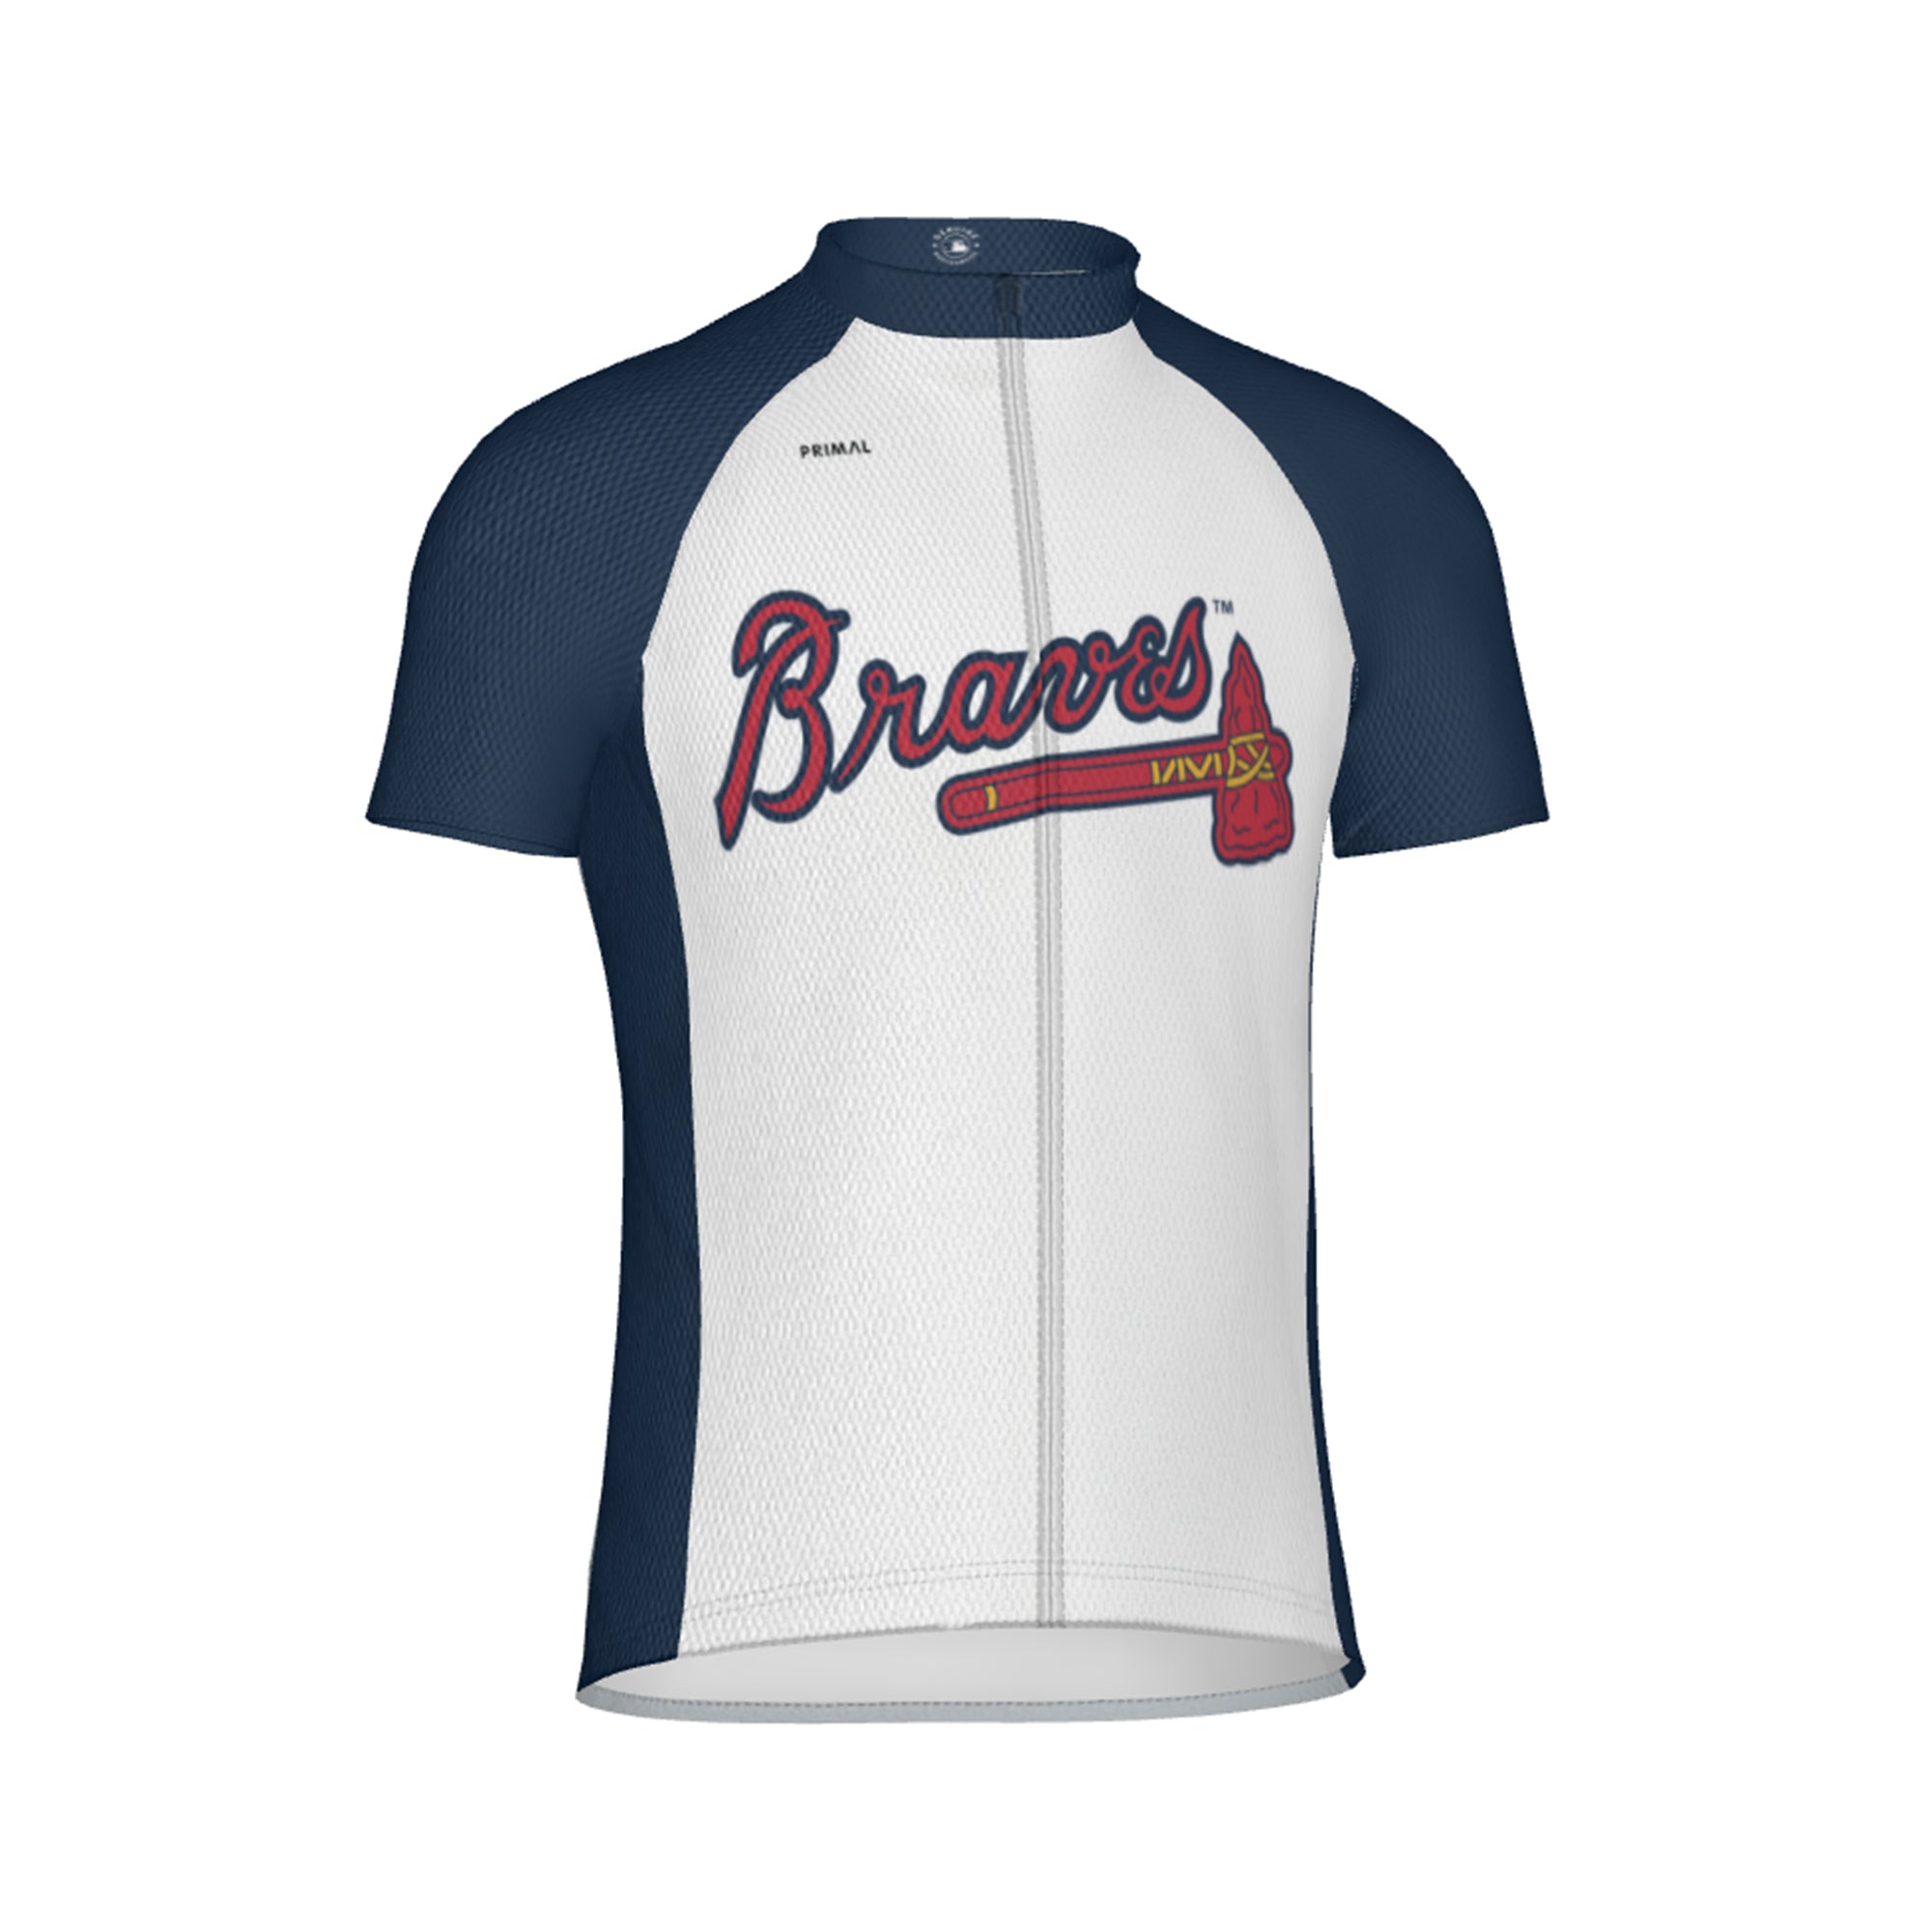 atlanta baseball jersey